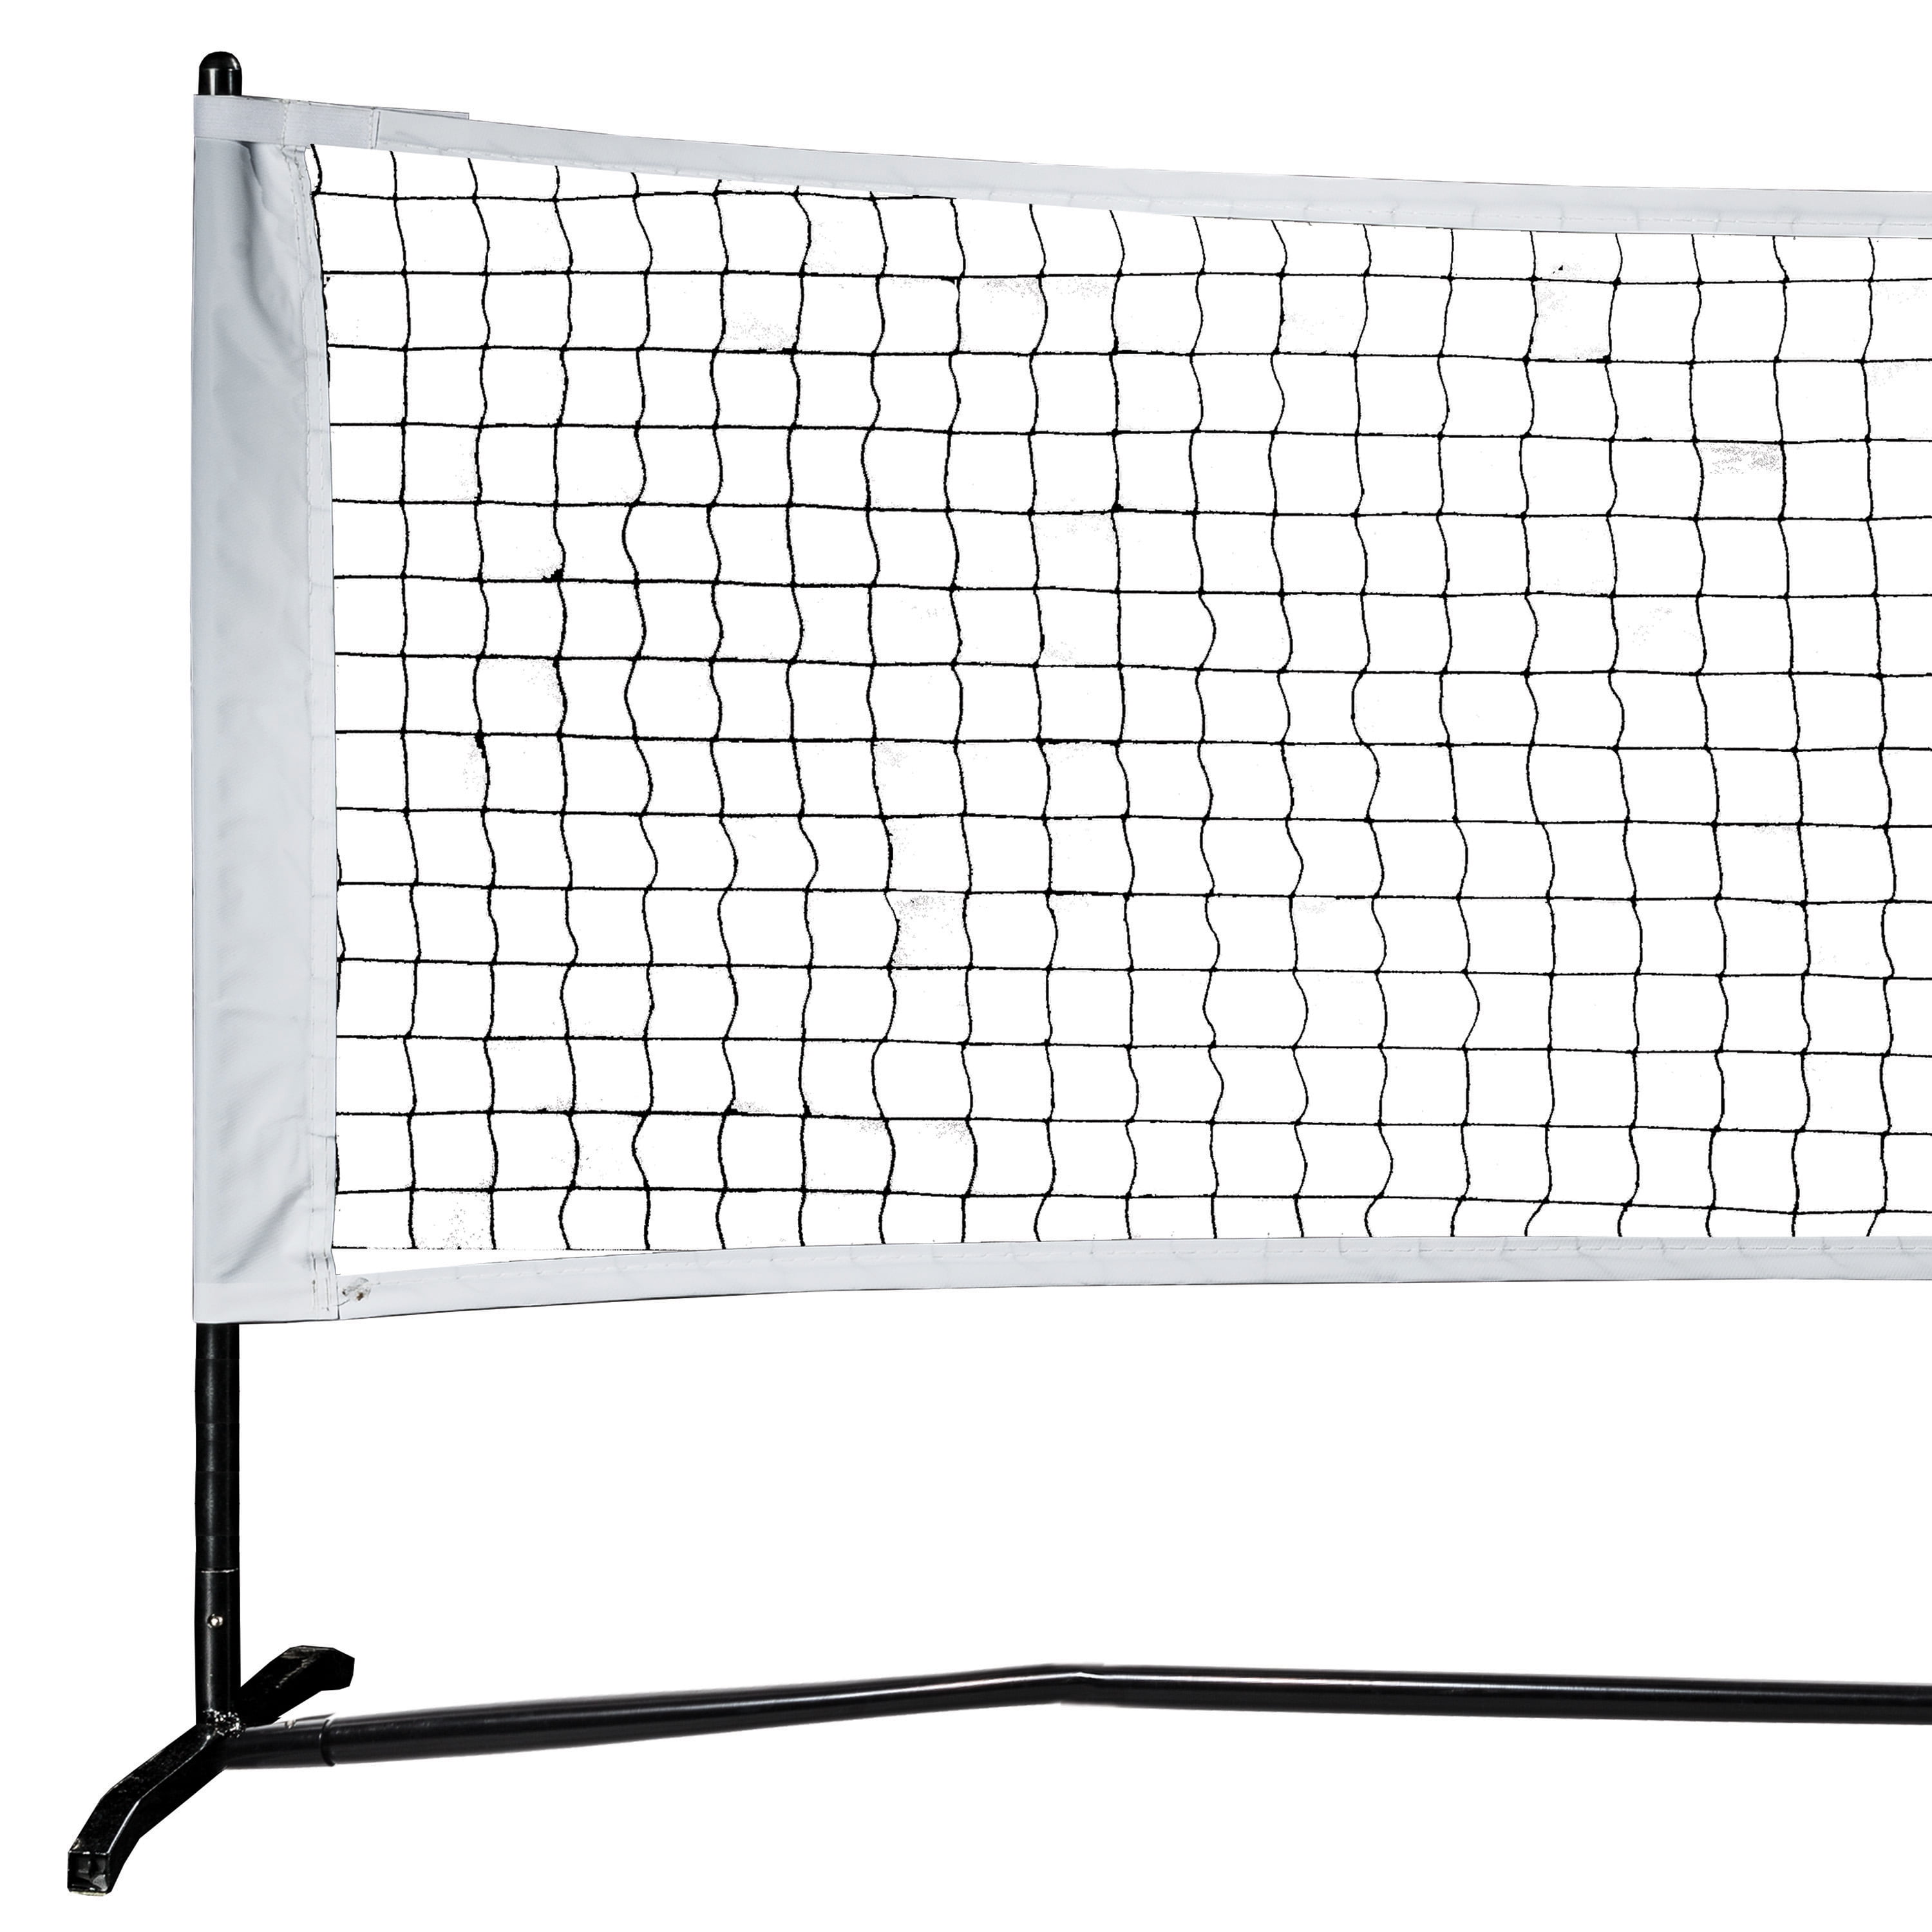 6.1m x 0.76m Professional Training Square Mesh Badminton Net Green Home Garden 